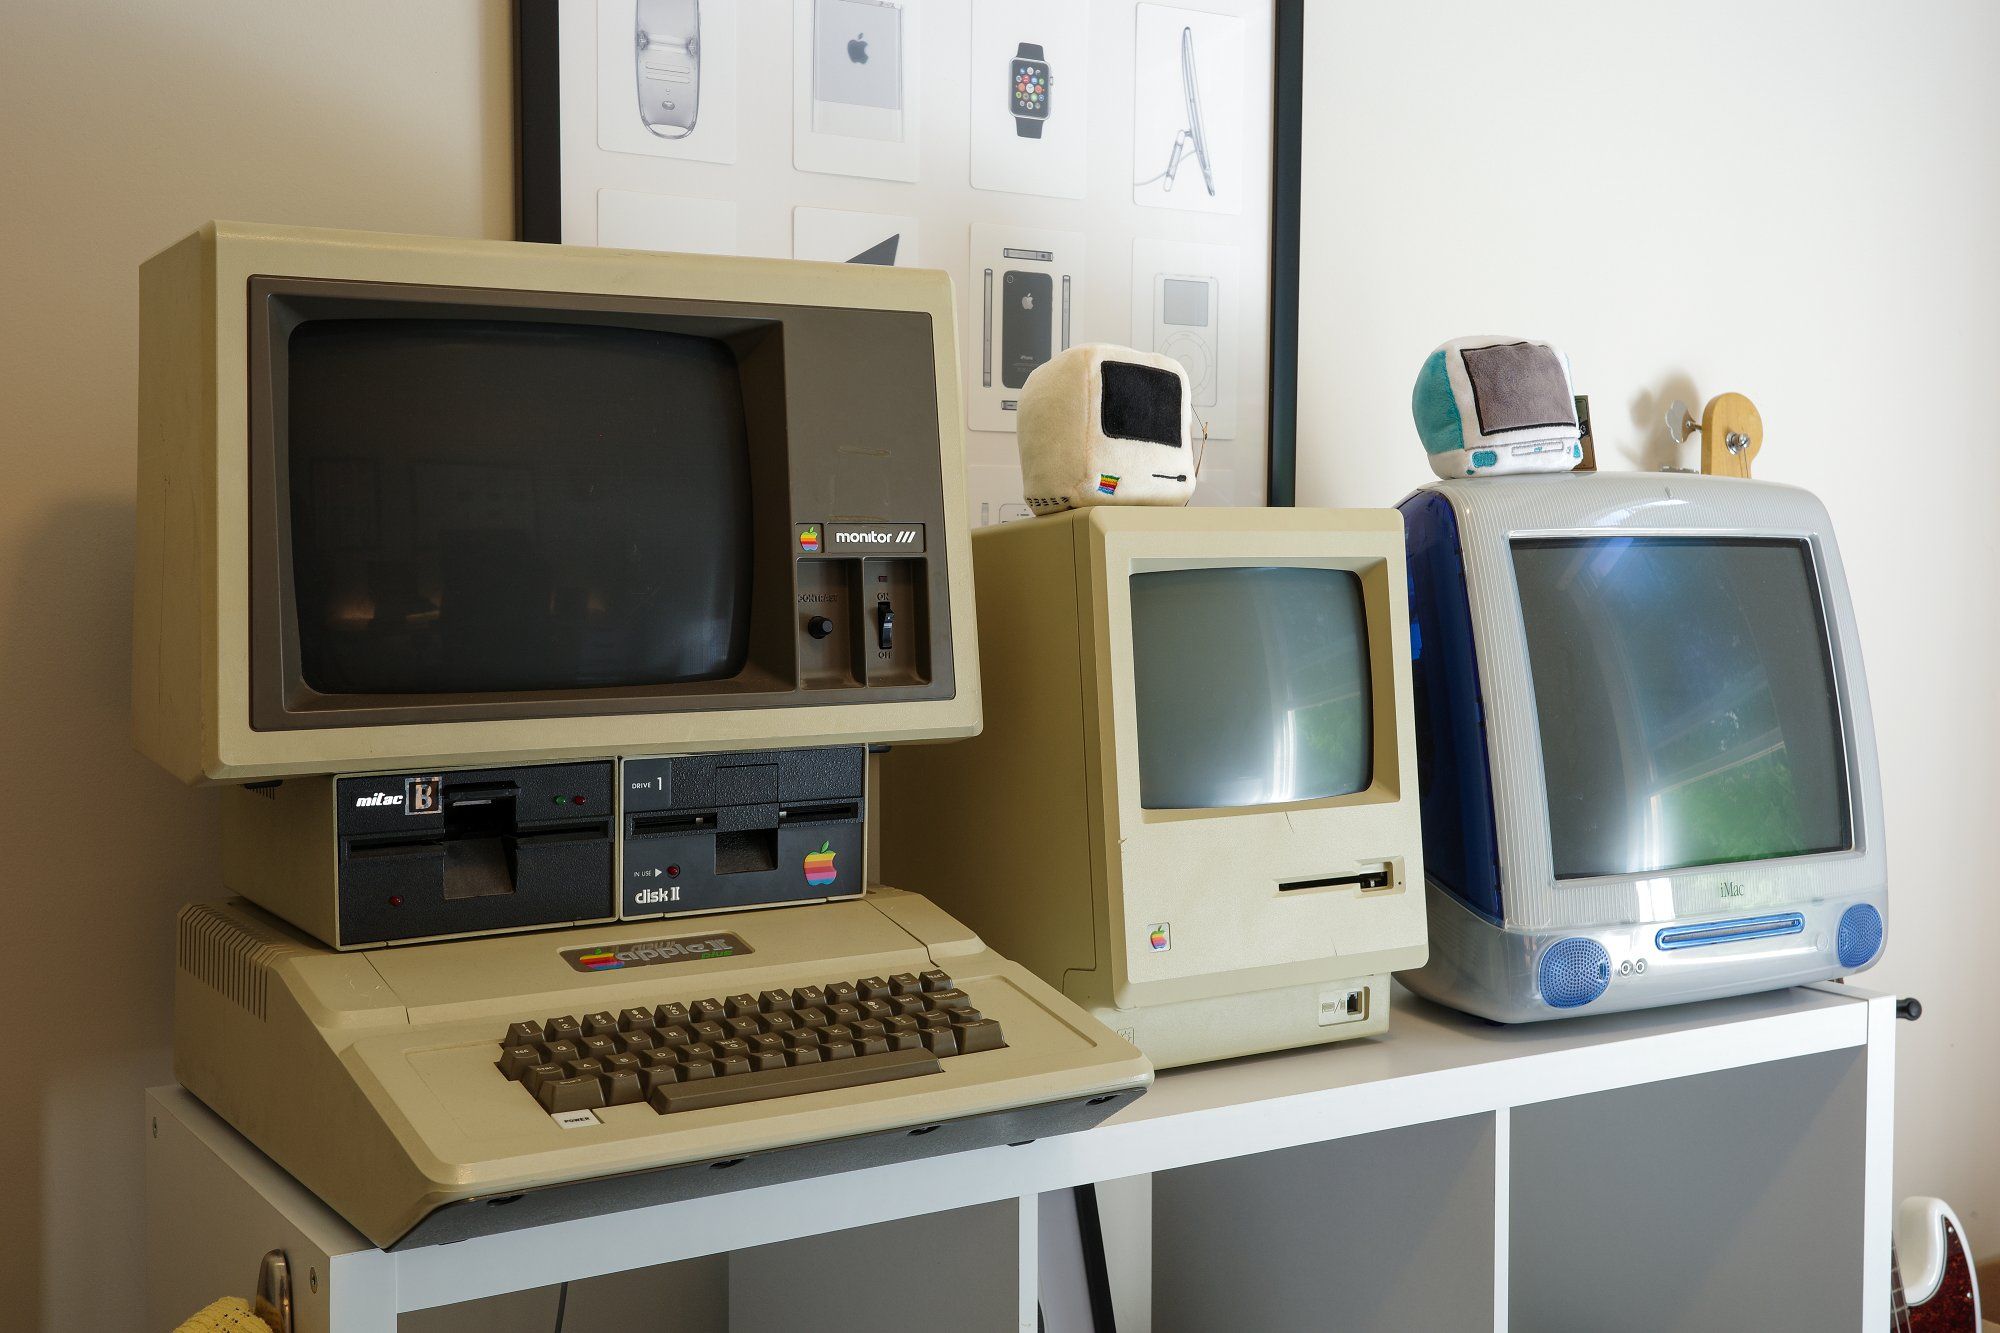 An Apple II Plus computer, a Macintosh 512K, and an iMac G3